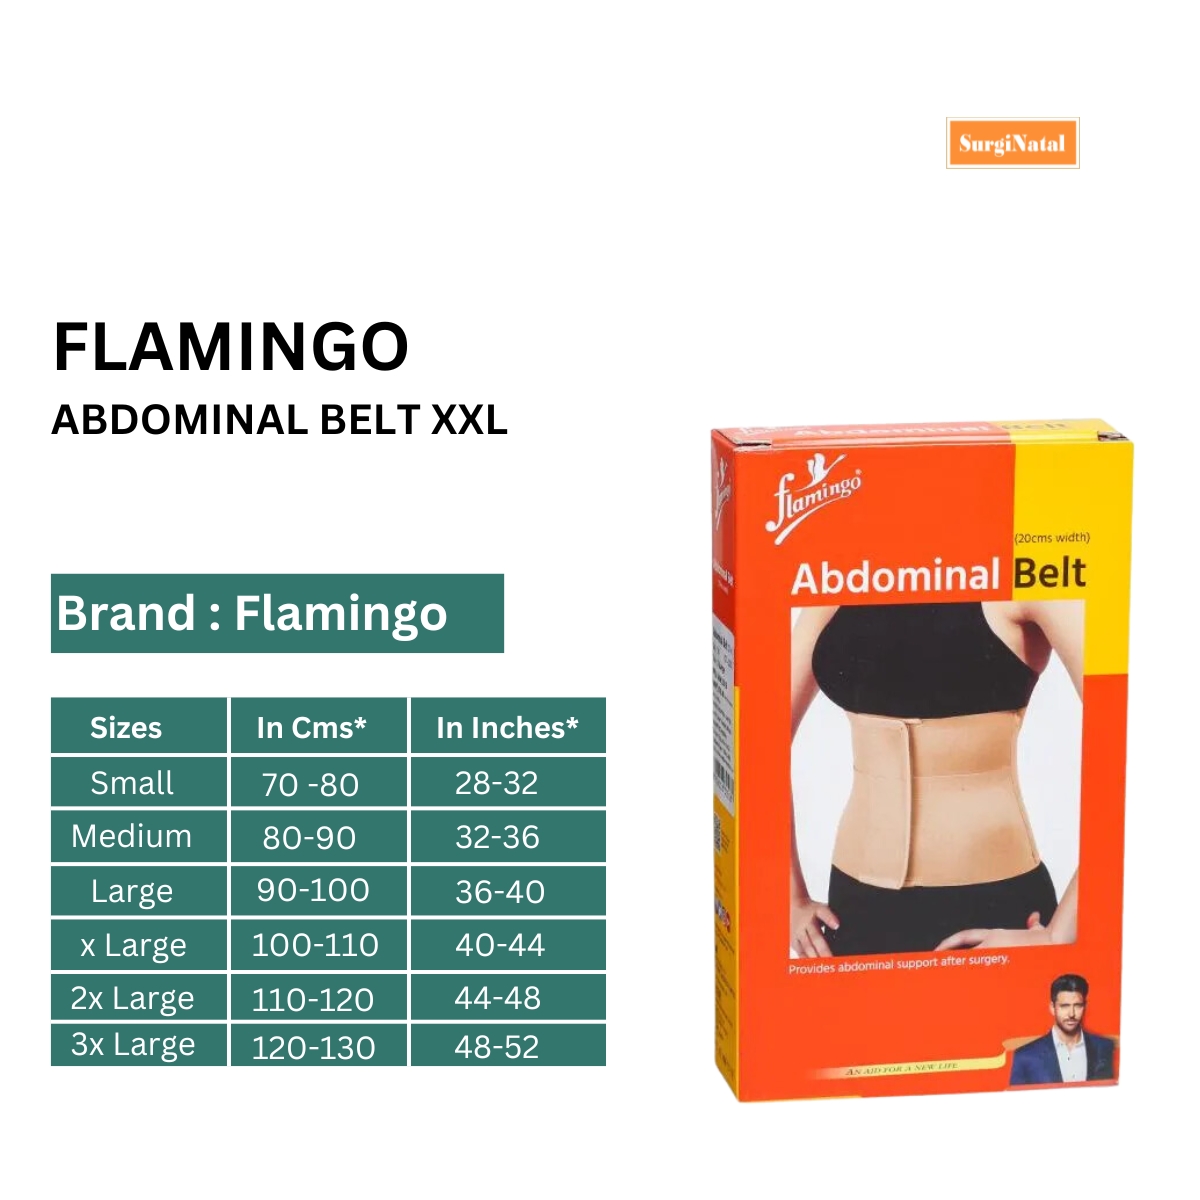 flamingo abdominal belt xxl